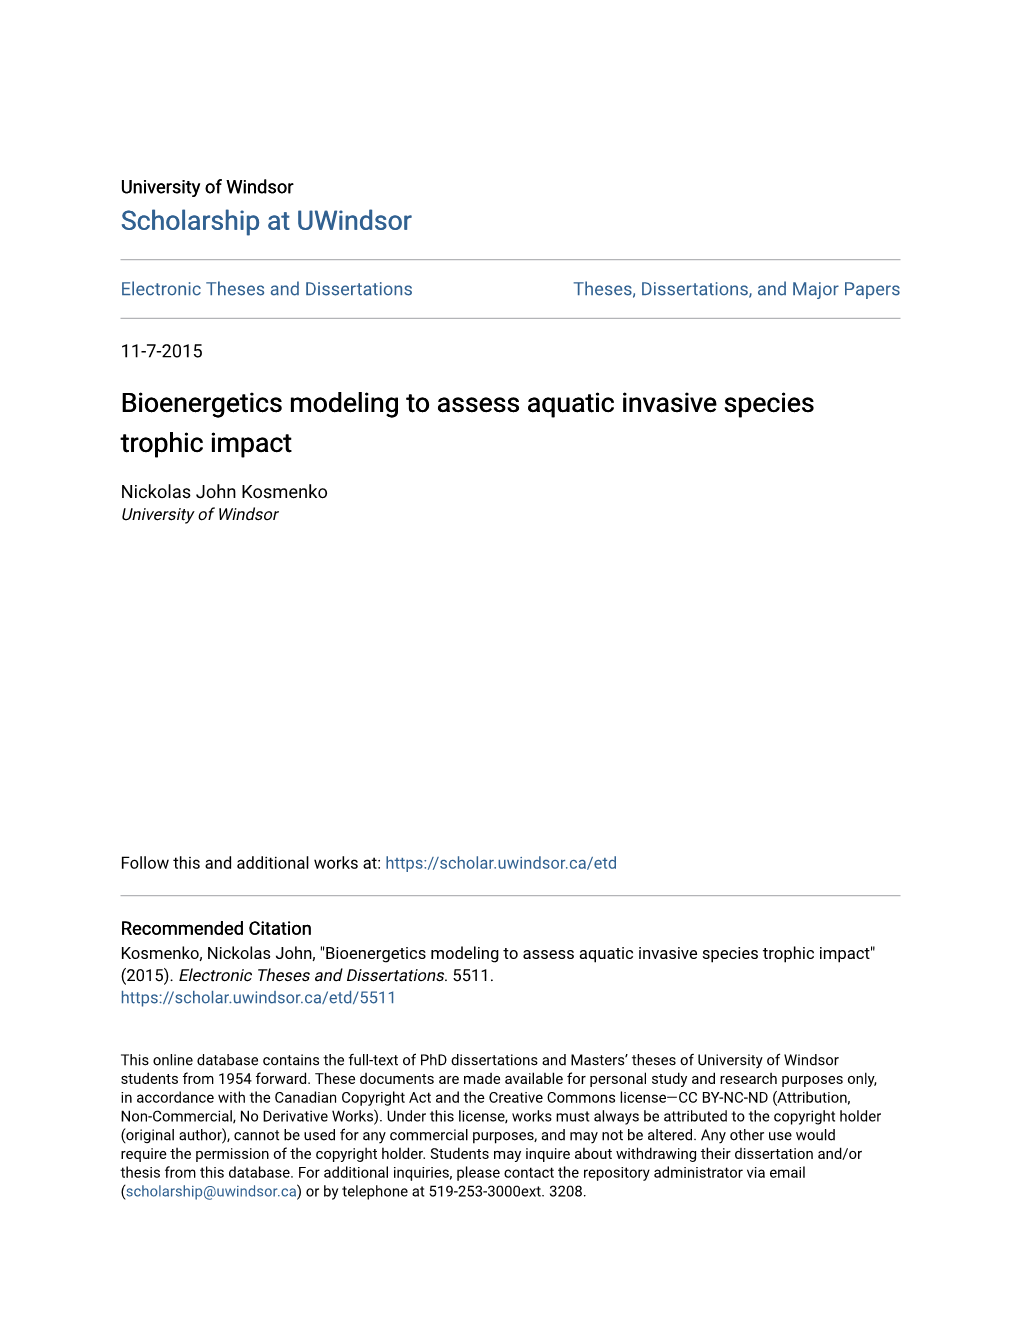 Bioenergetics Modeling to Assess Aquatic Invasive Species Trophic Impact